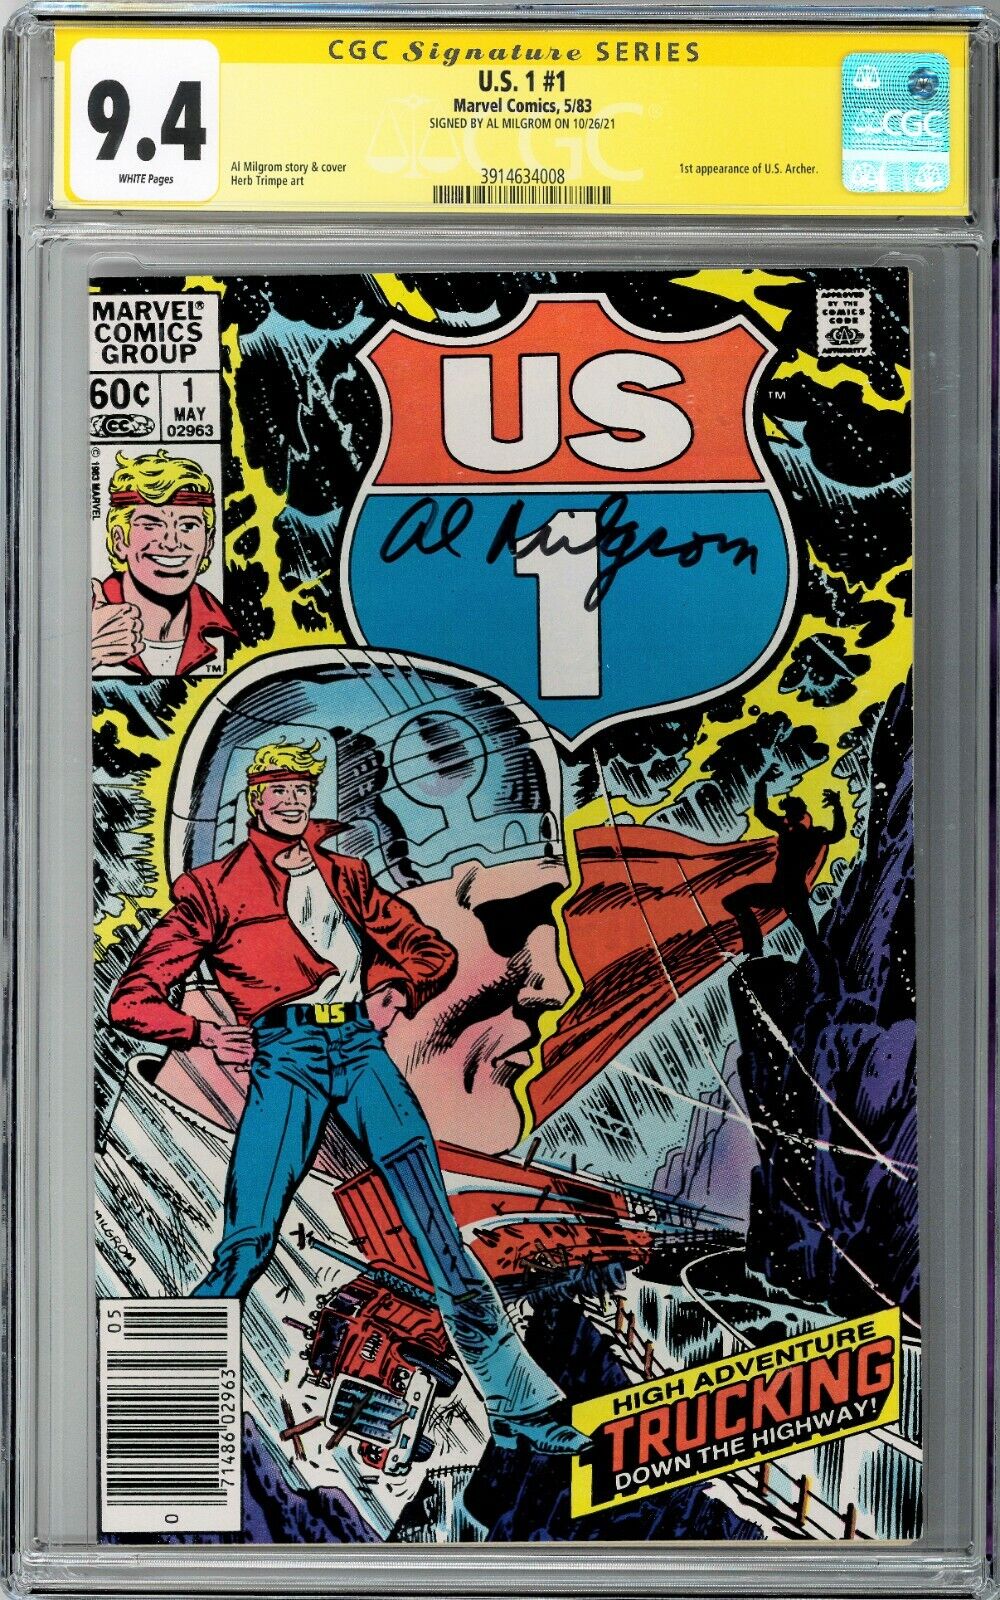 U.S. 1 #1 CGC SS 9.4 (May 1983, Marvel) Signed Al Milgrom, 1st app U.S. Archer